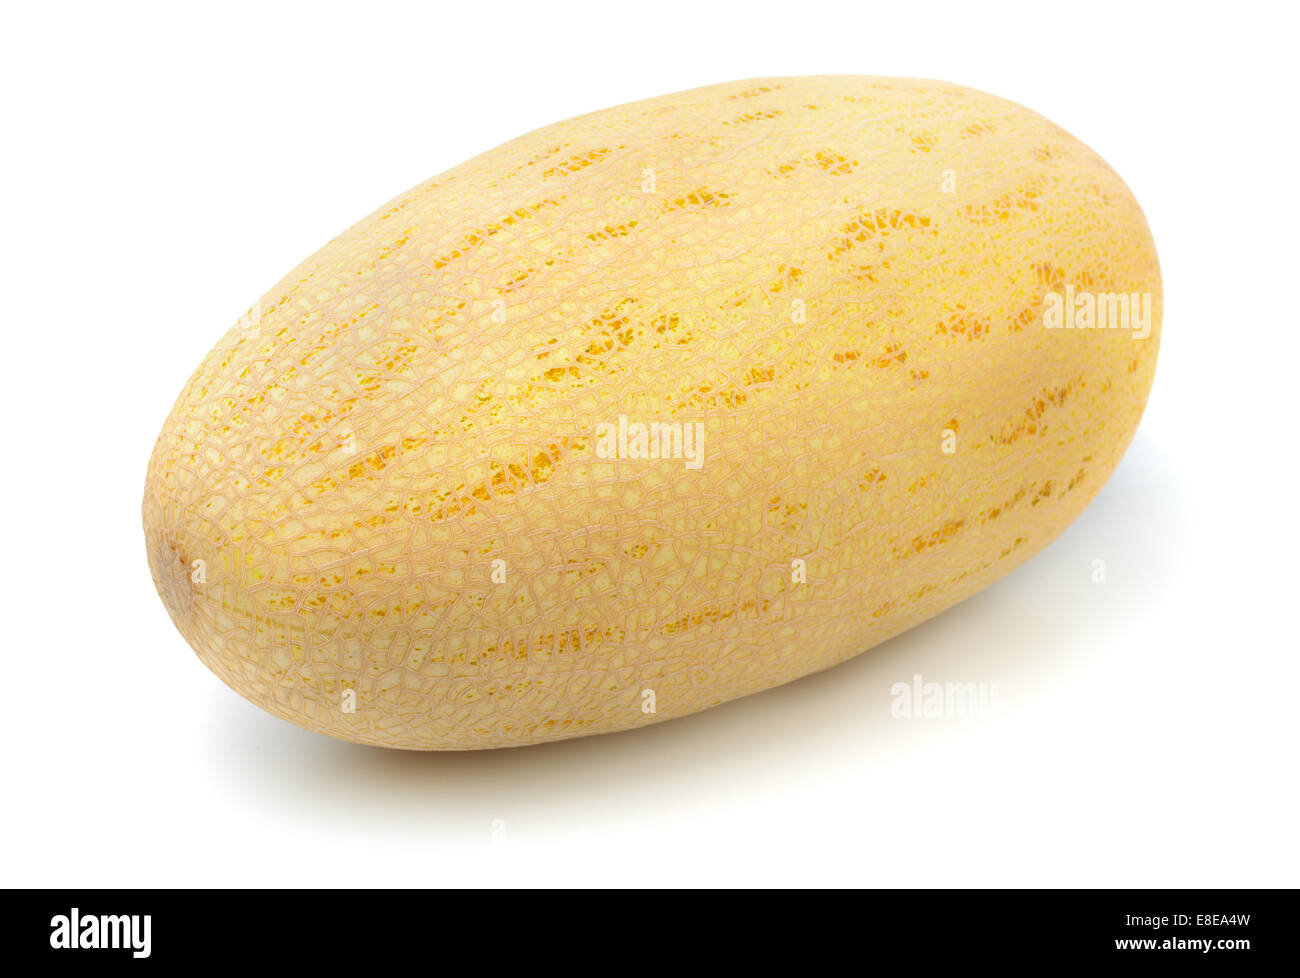 Whole melon isolated on white Stock Photo